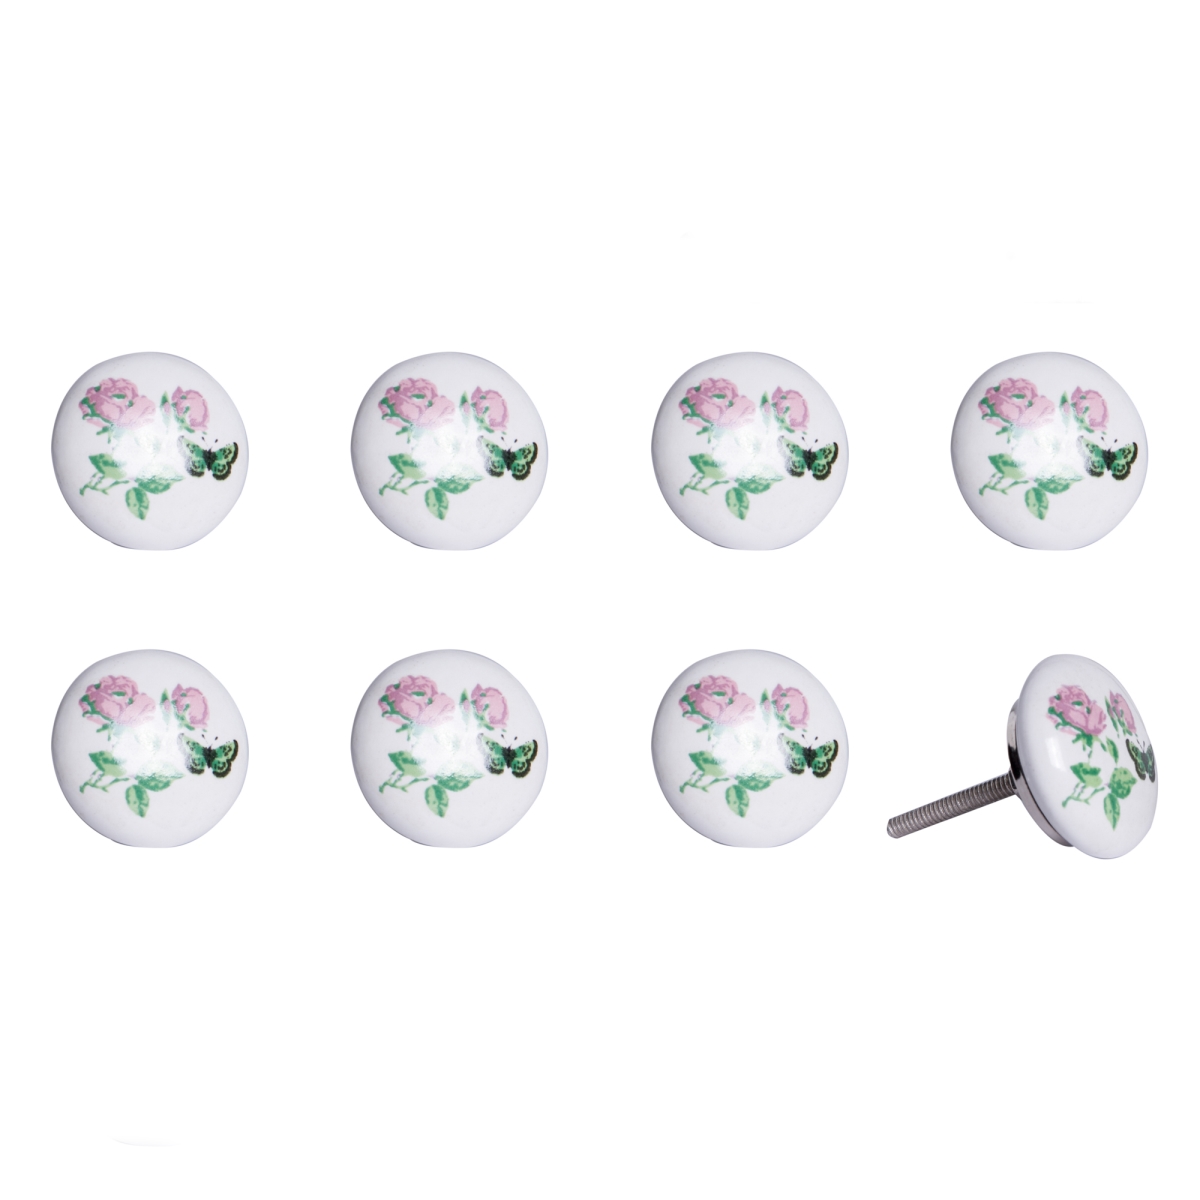 676685031266 Vintage Hand Painted Ceramic Knob Set - Pink, White & Green - Pack Of 8